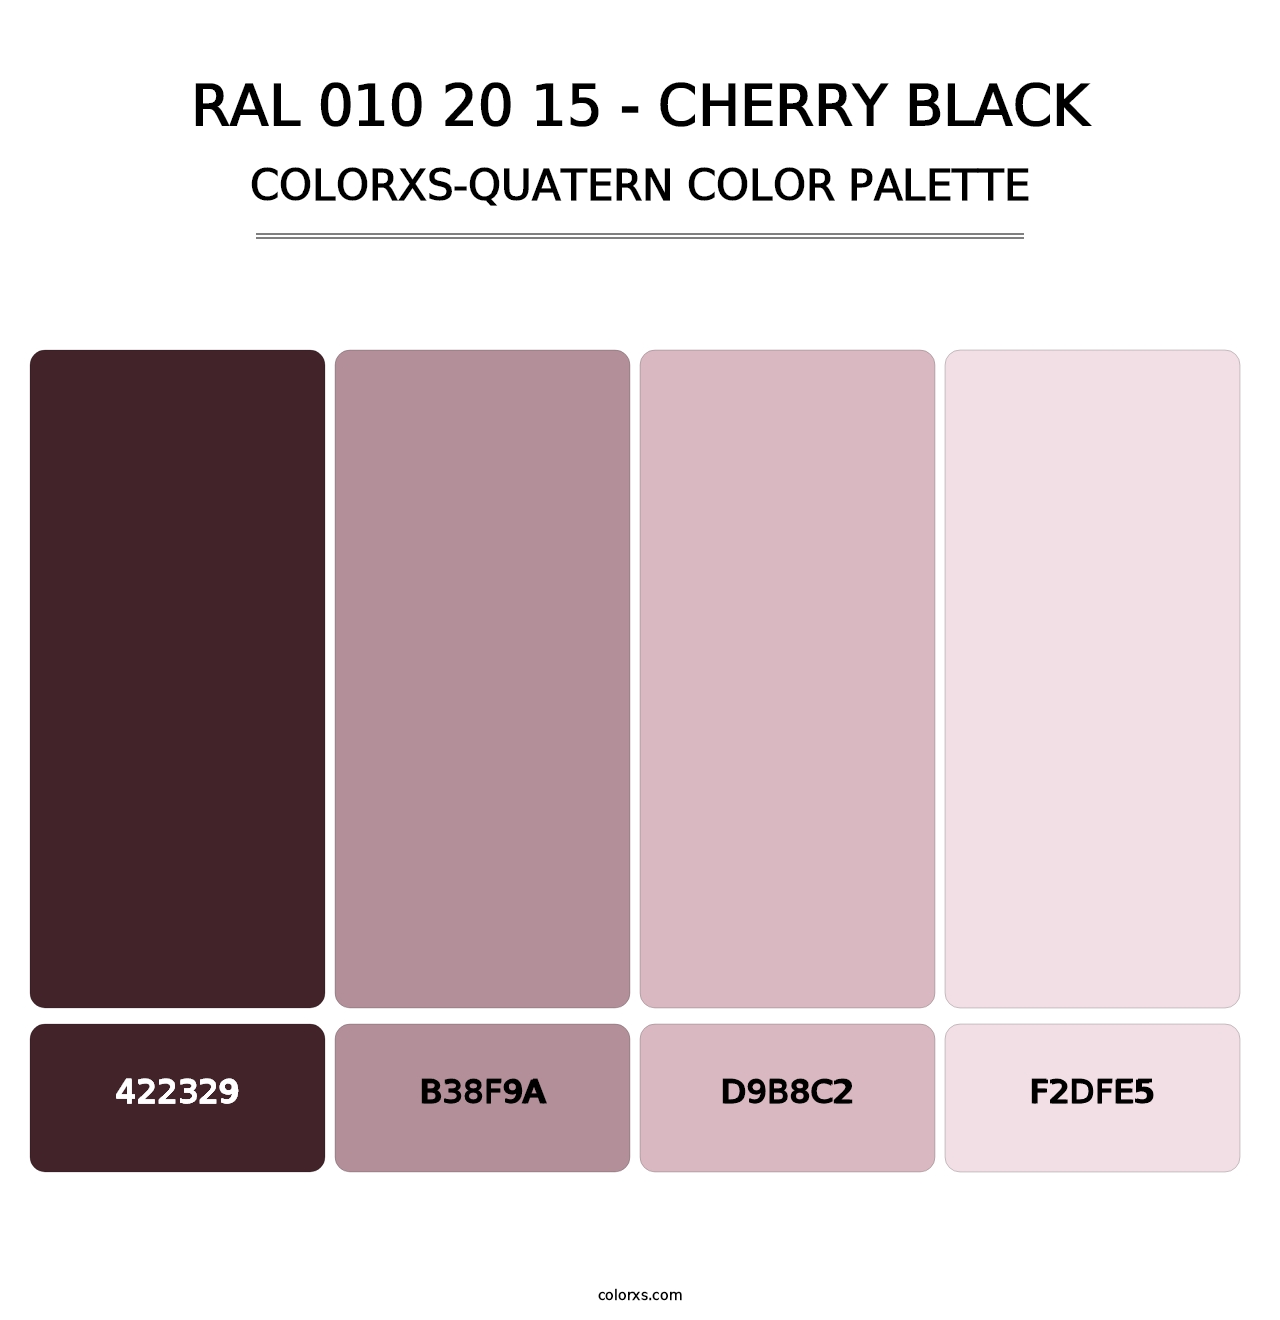 RAL 010 20 15 - Cherry Black - Colorxs Quatern Palette